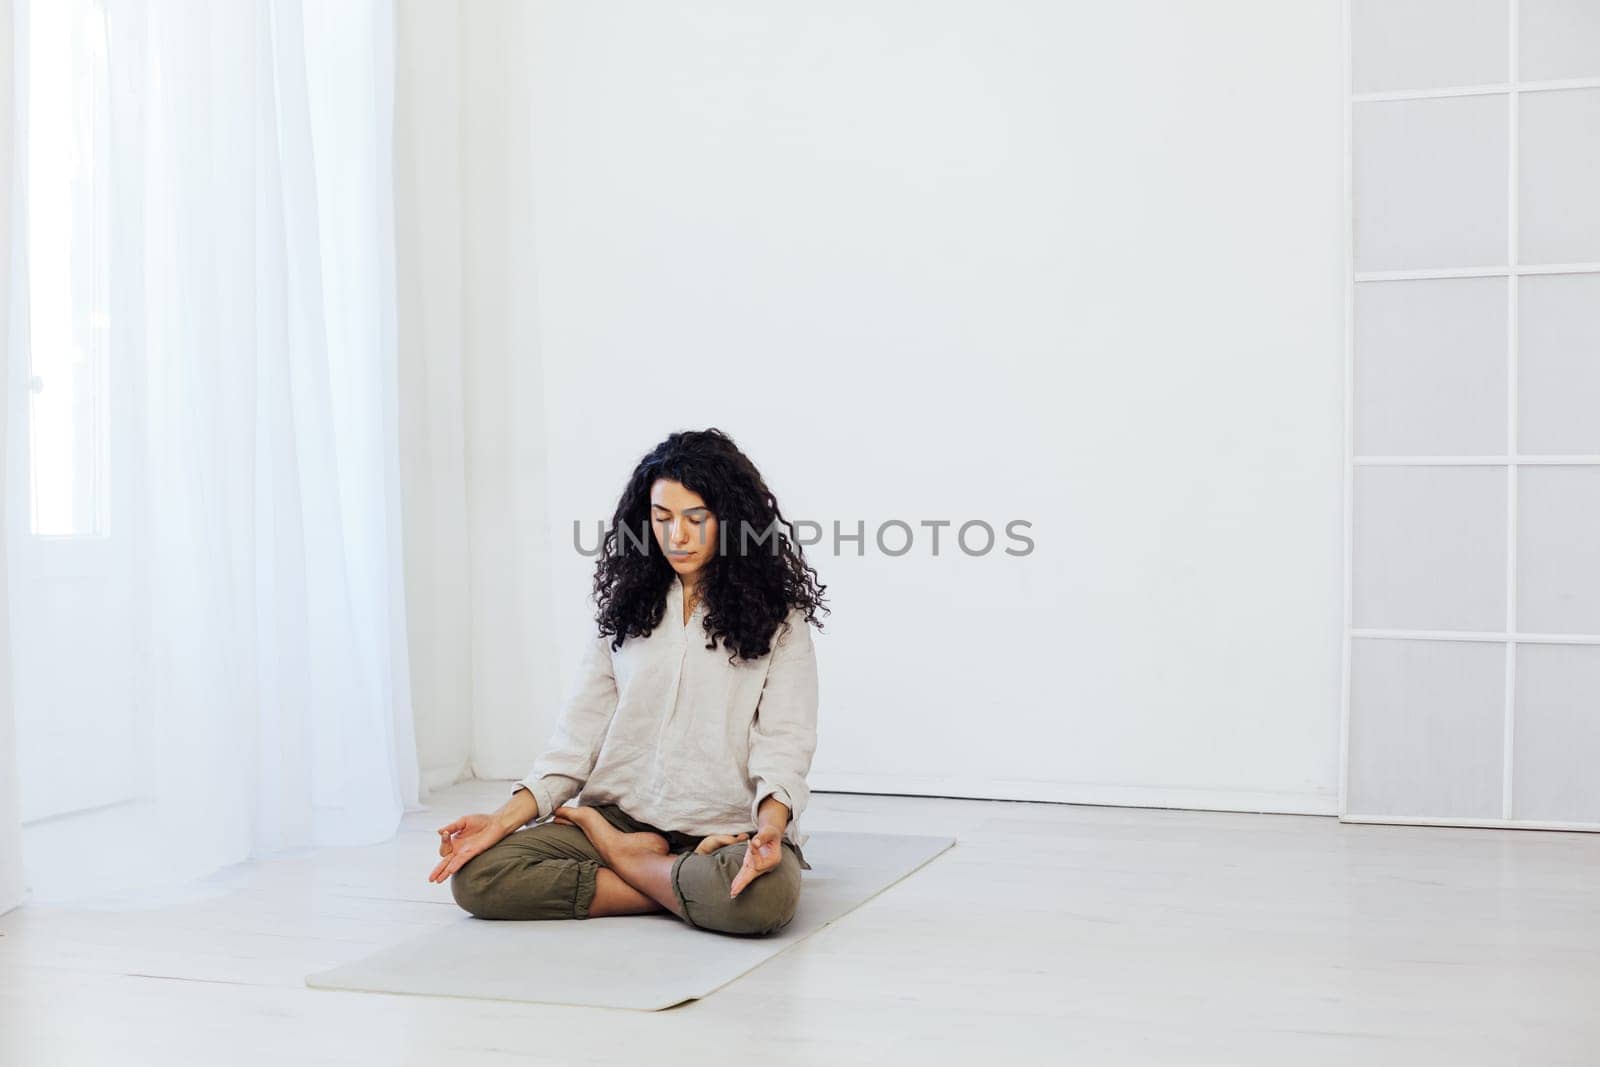 Female engaged in yoga asana gymnastics sport